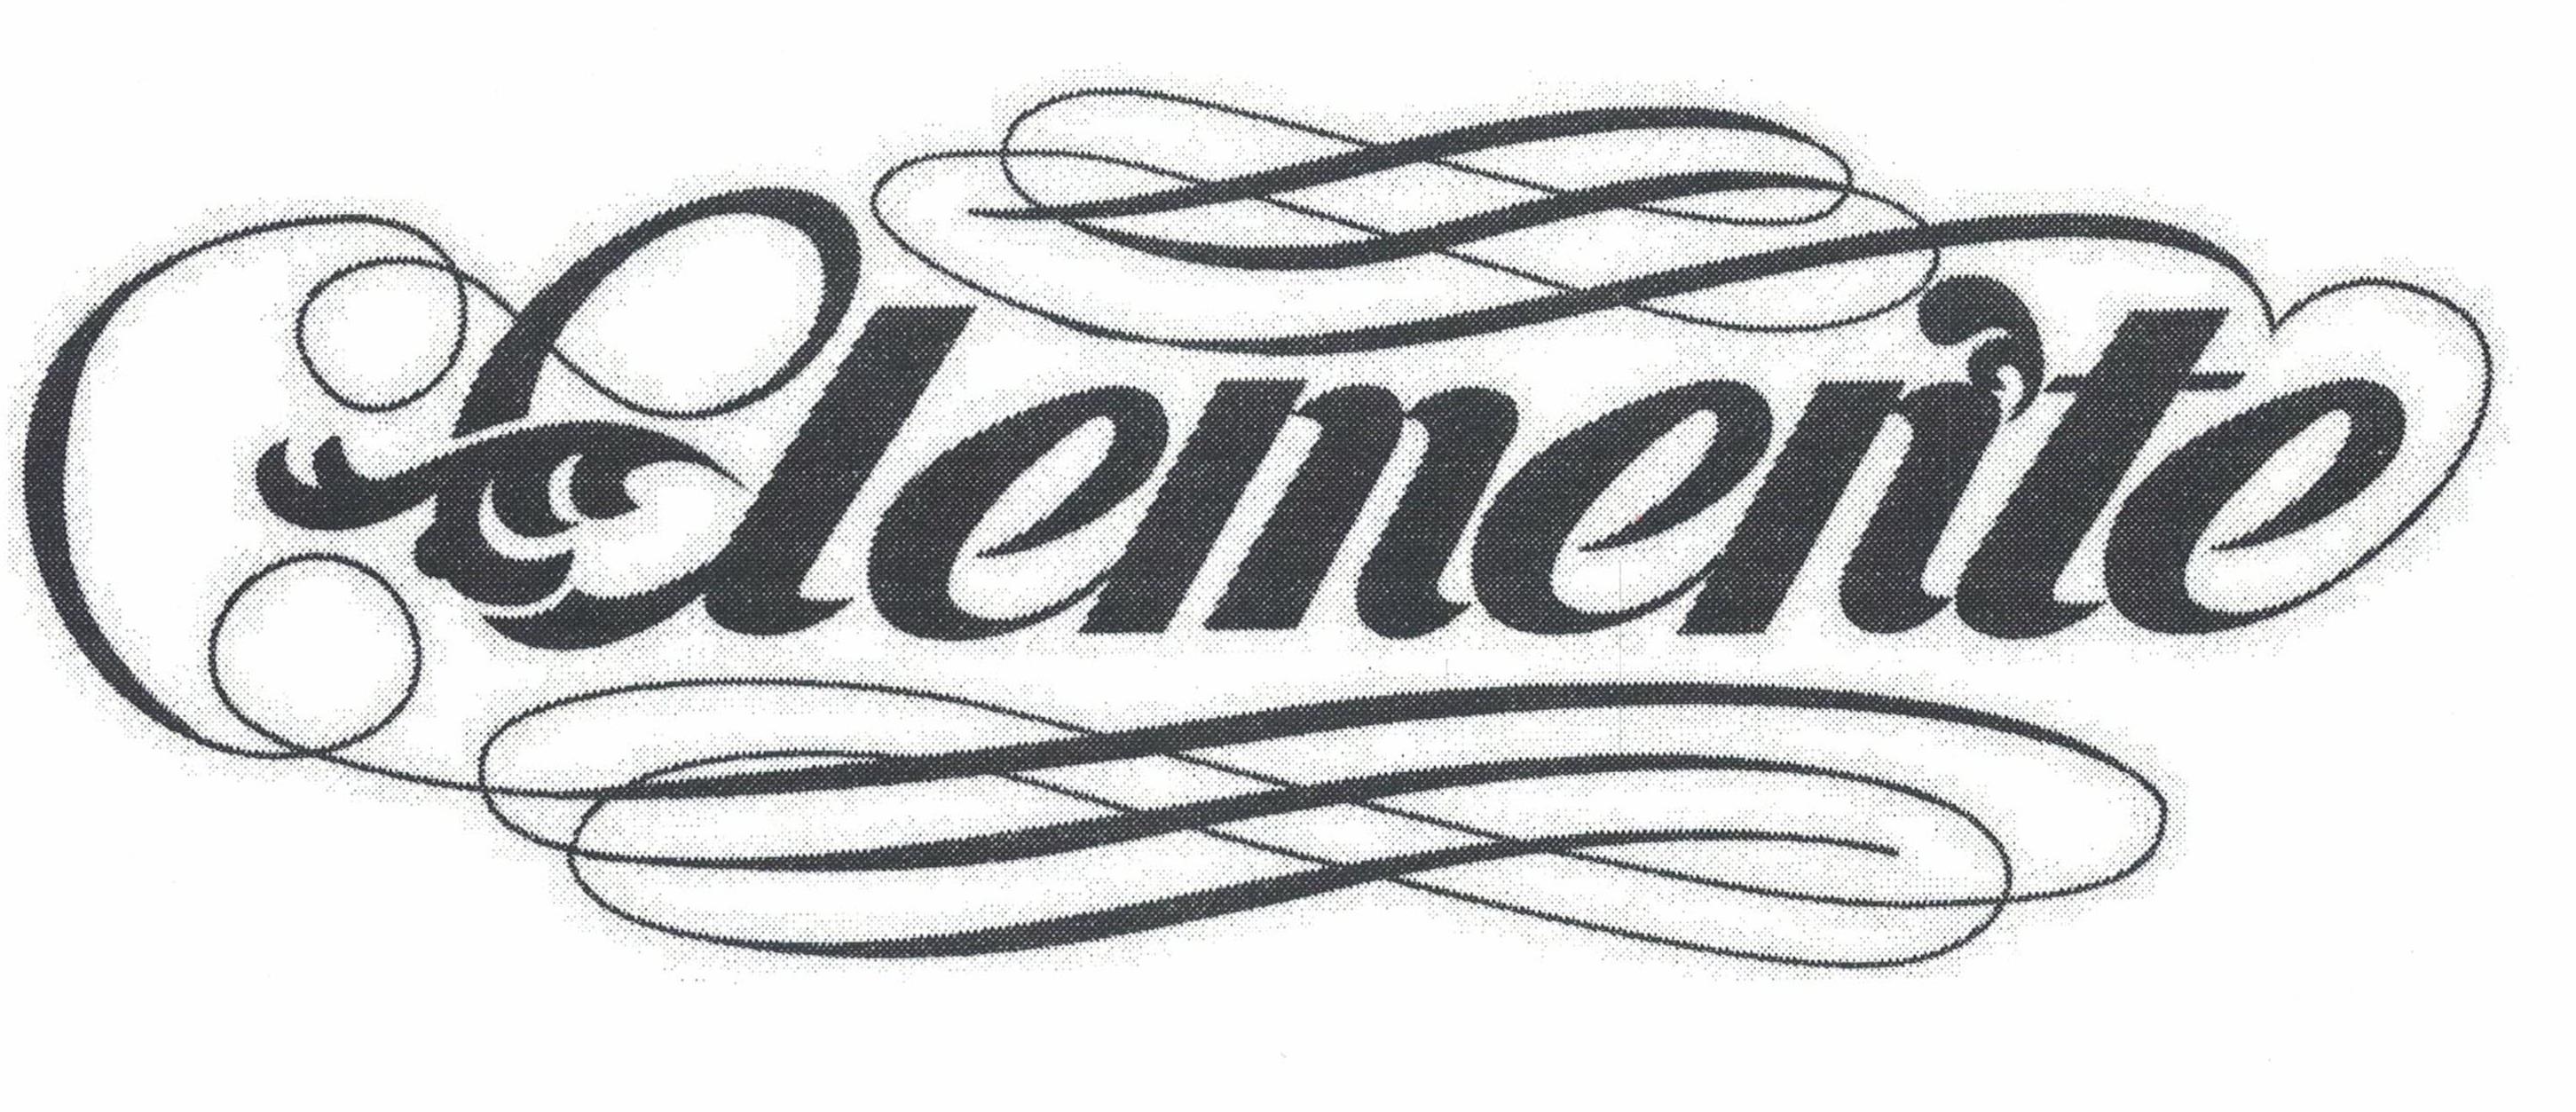 Trademark Logo CLEMENTE